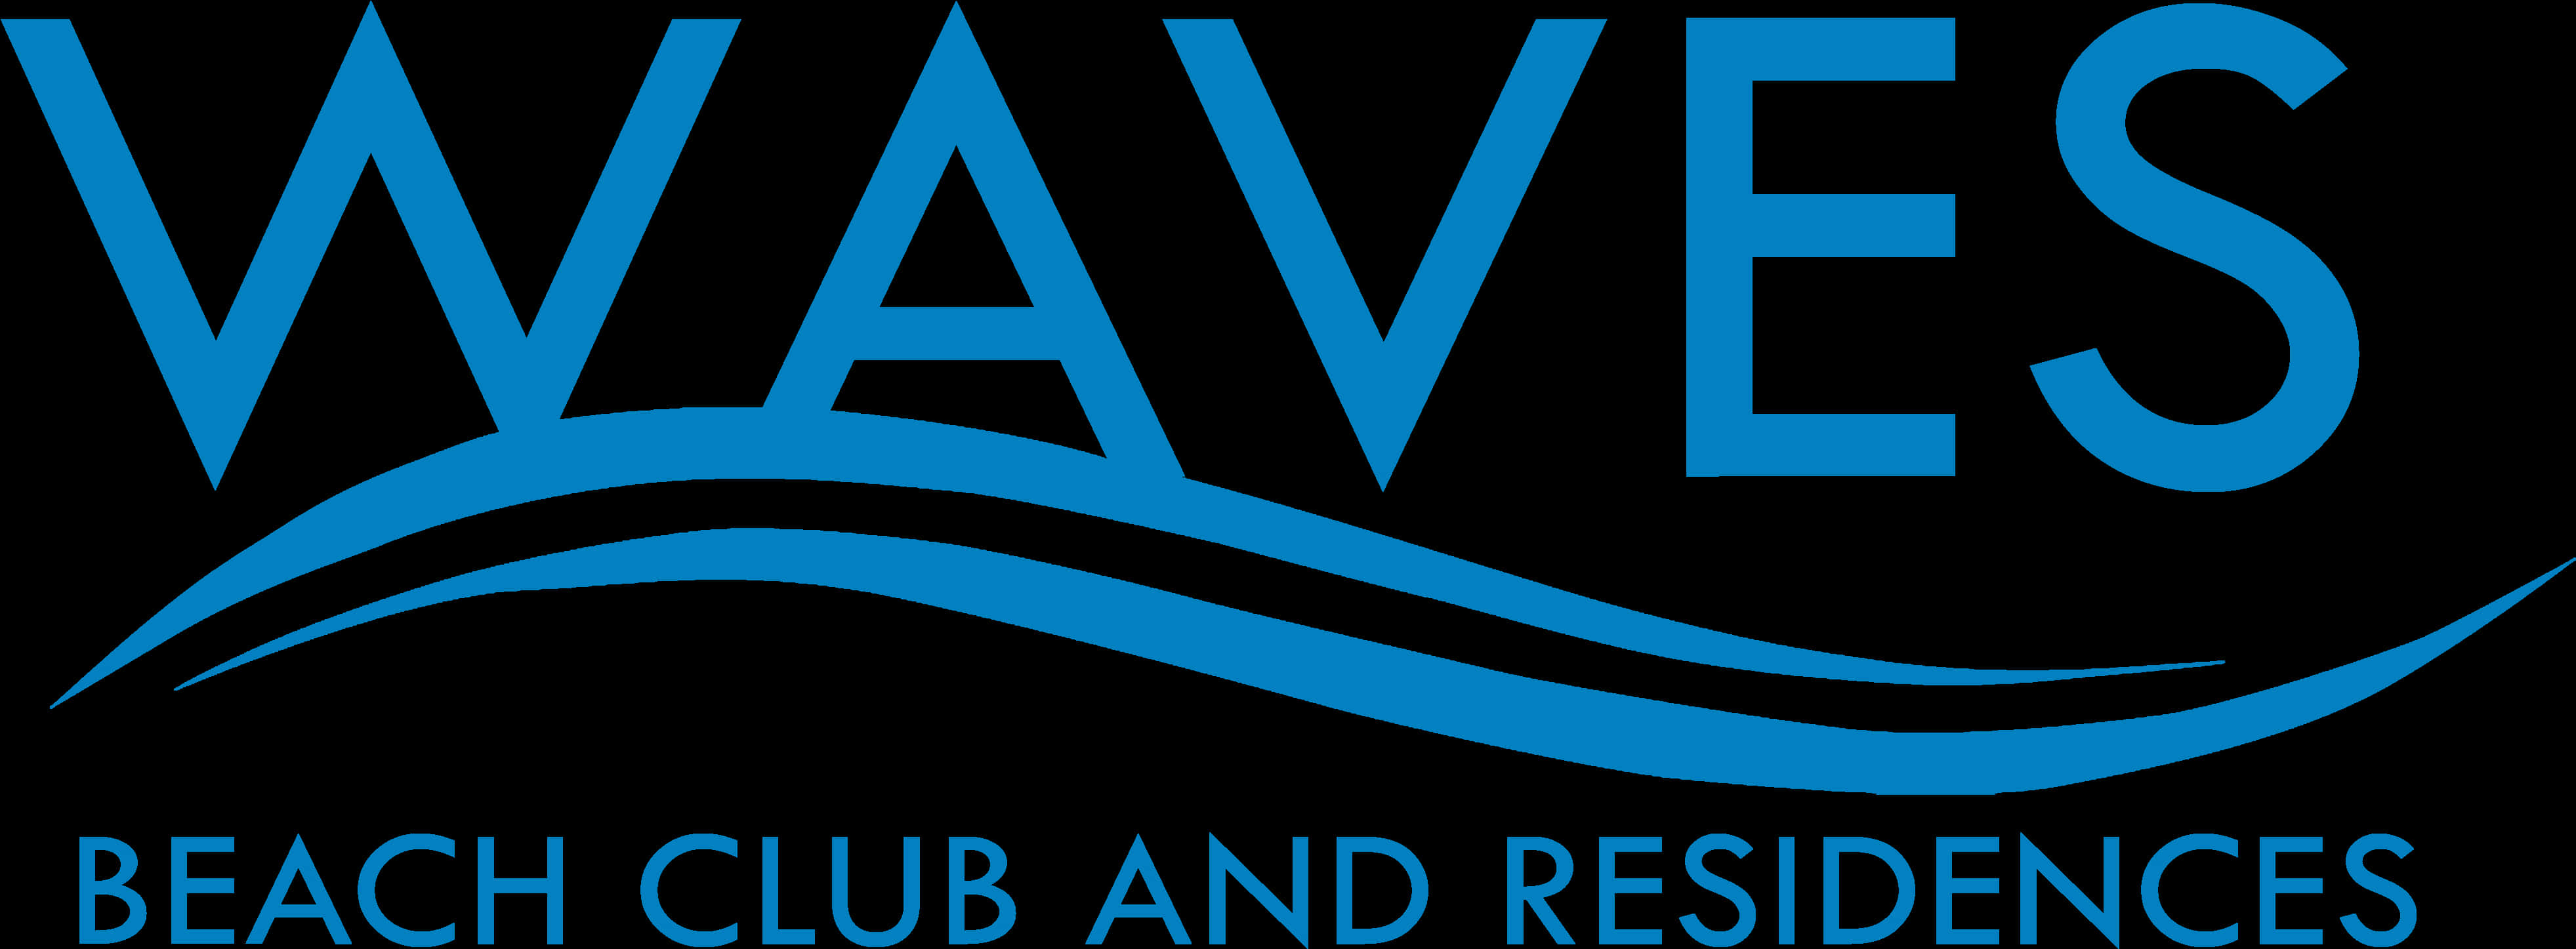 Waves Beach Club Residences Logo